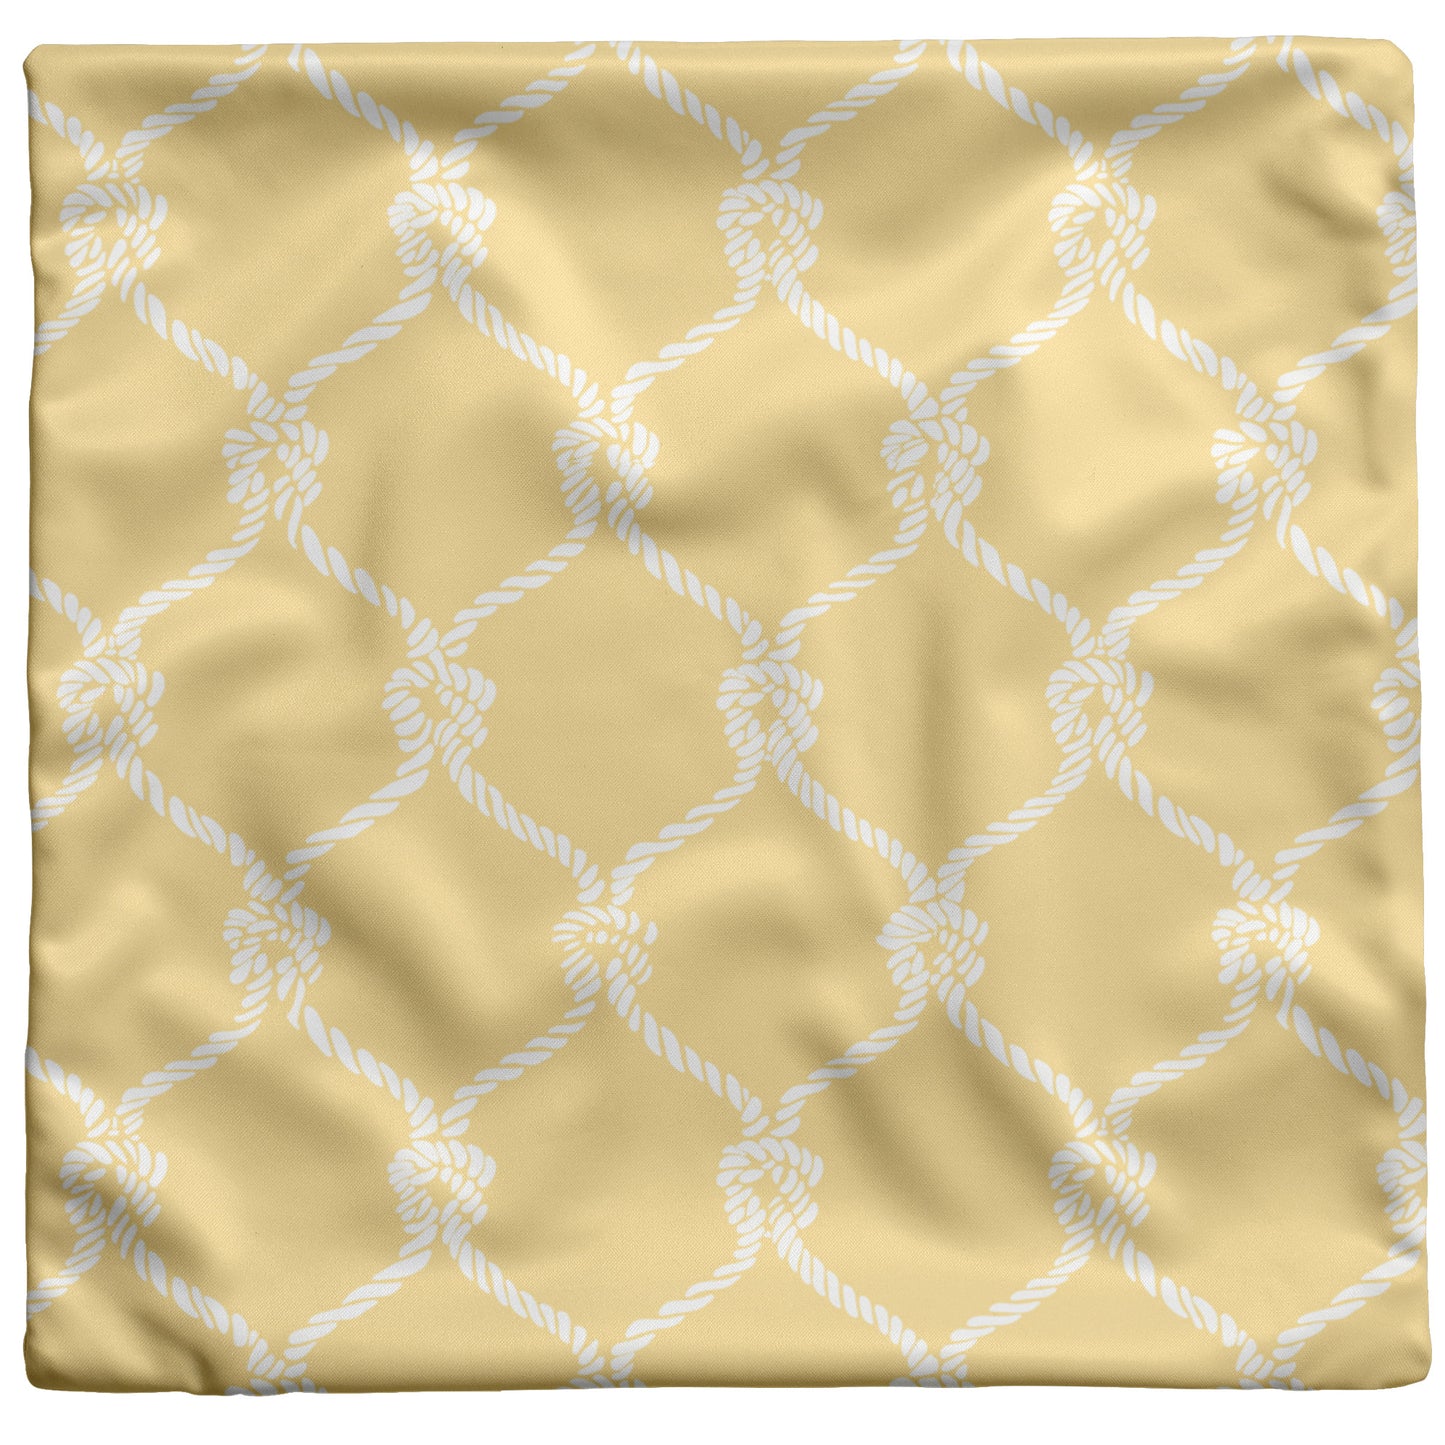 Nautical Netting Design on Yellow Background, Throw Pillow